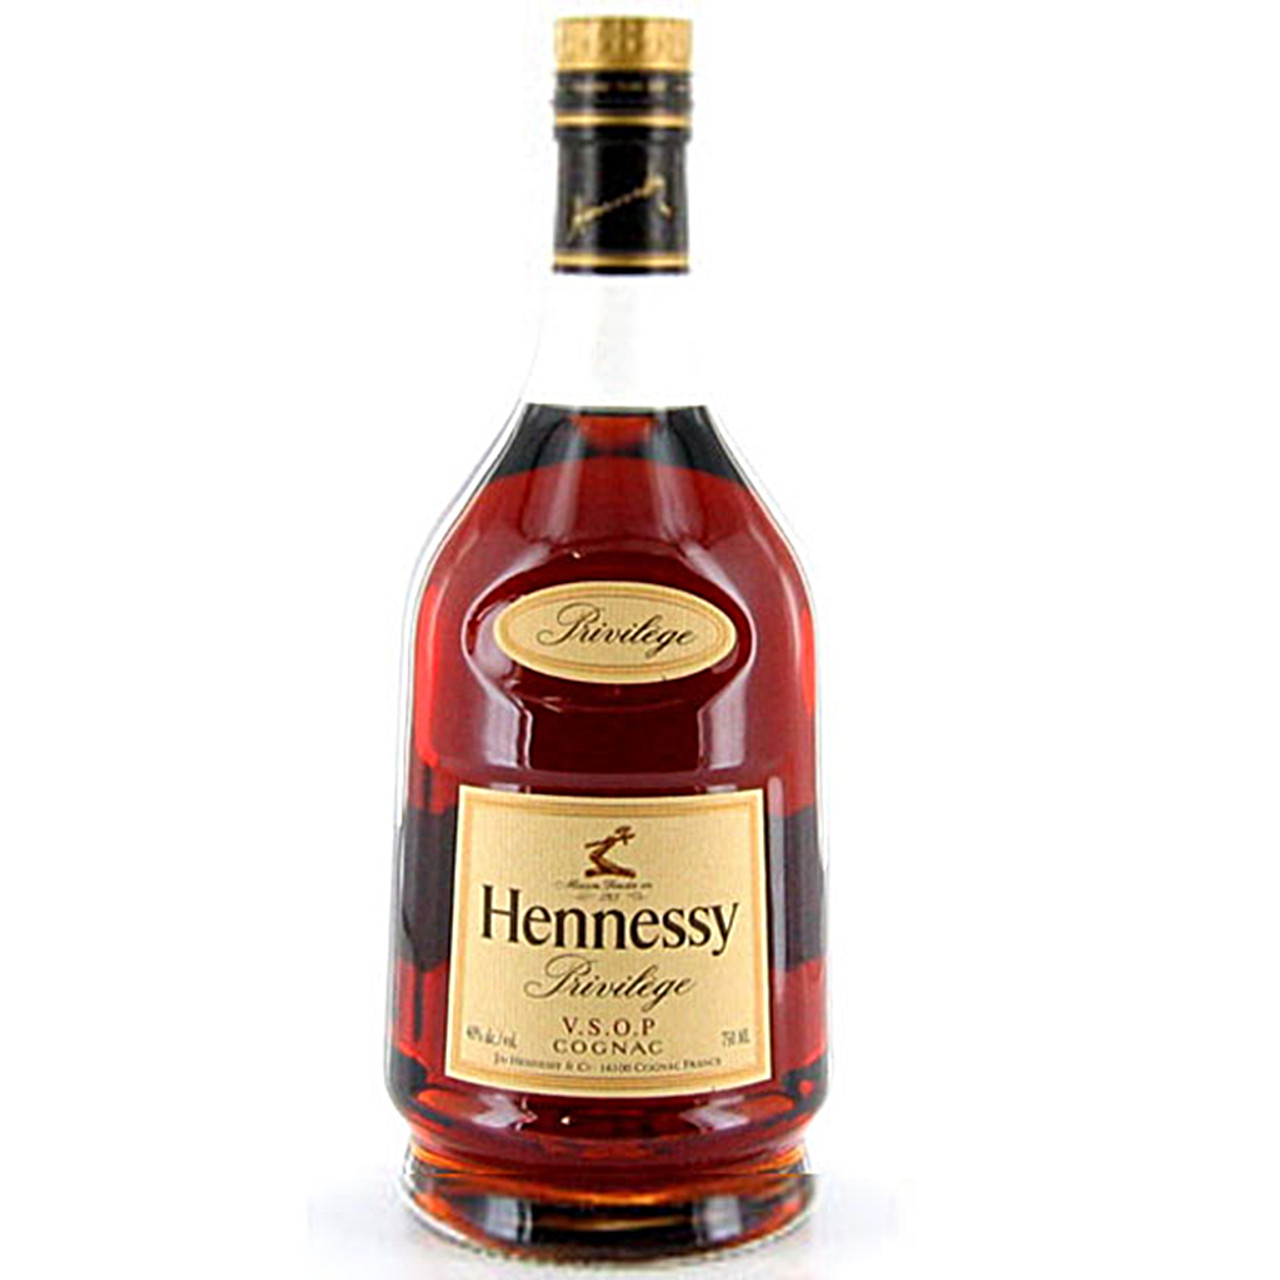 Hennessy Cognac Vsop 750mL - Wally's Wine & Spirits